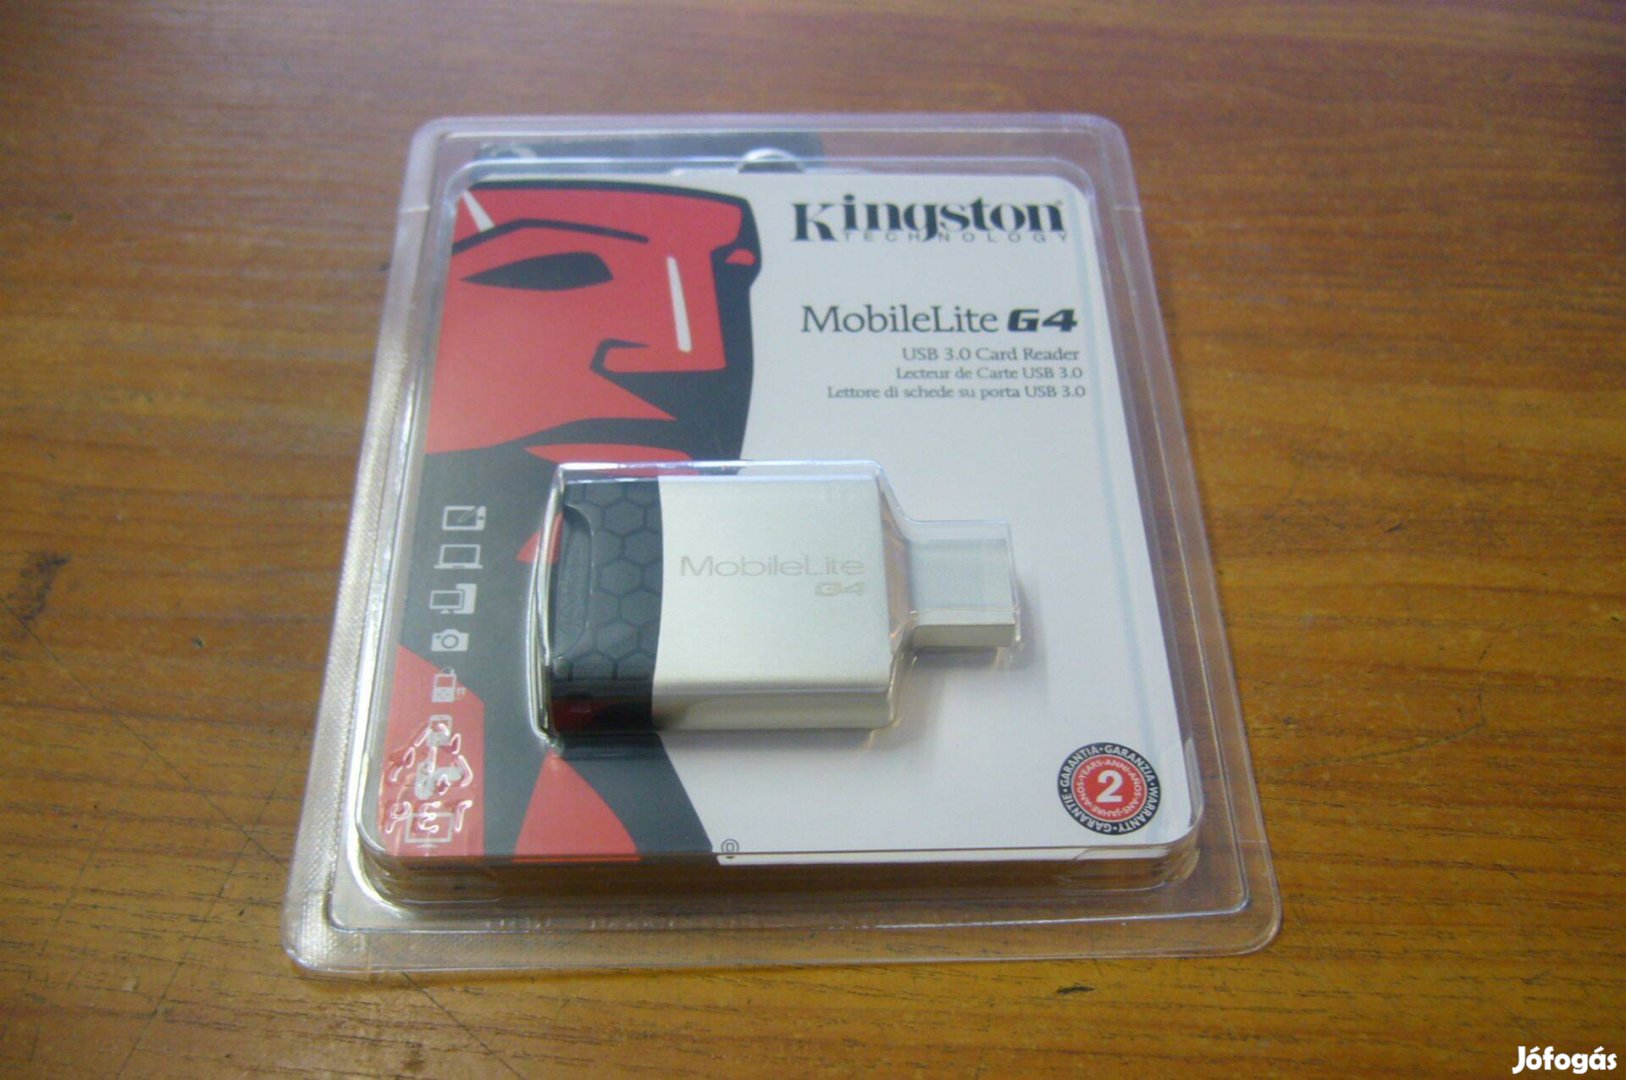 Új dobozos Kingston mobilelite G4 SD kártya olvasó!